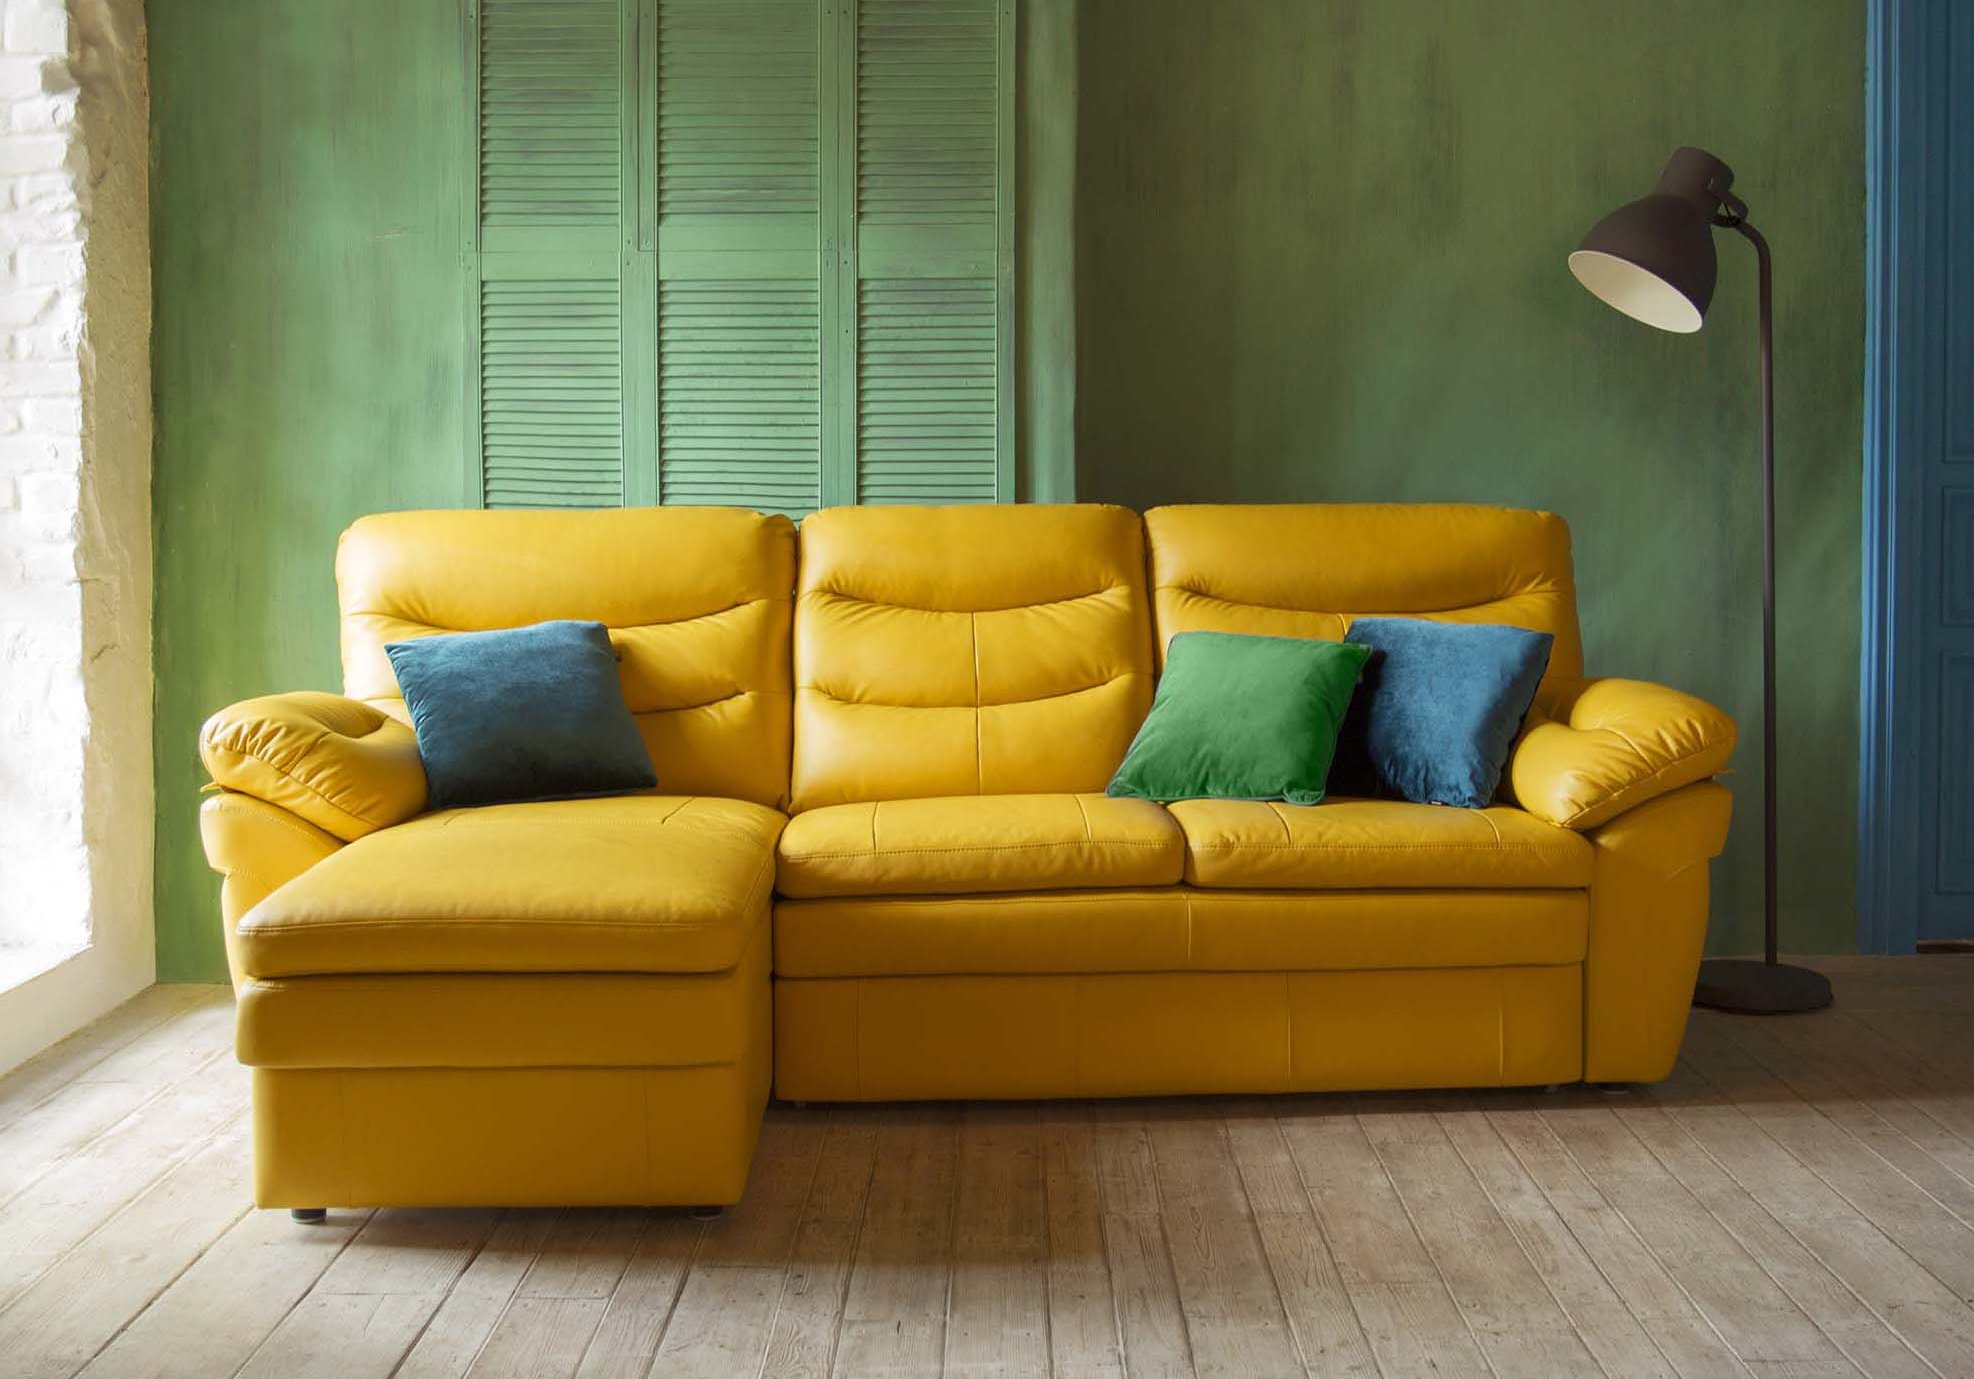 бирюзовый диван с желтыми подушками